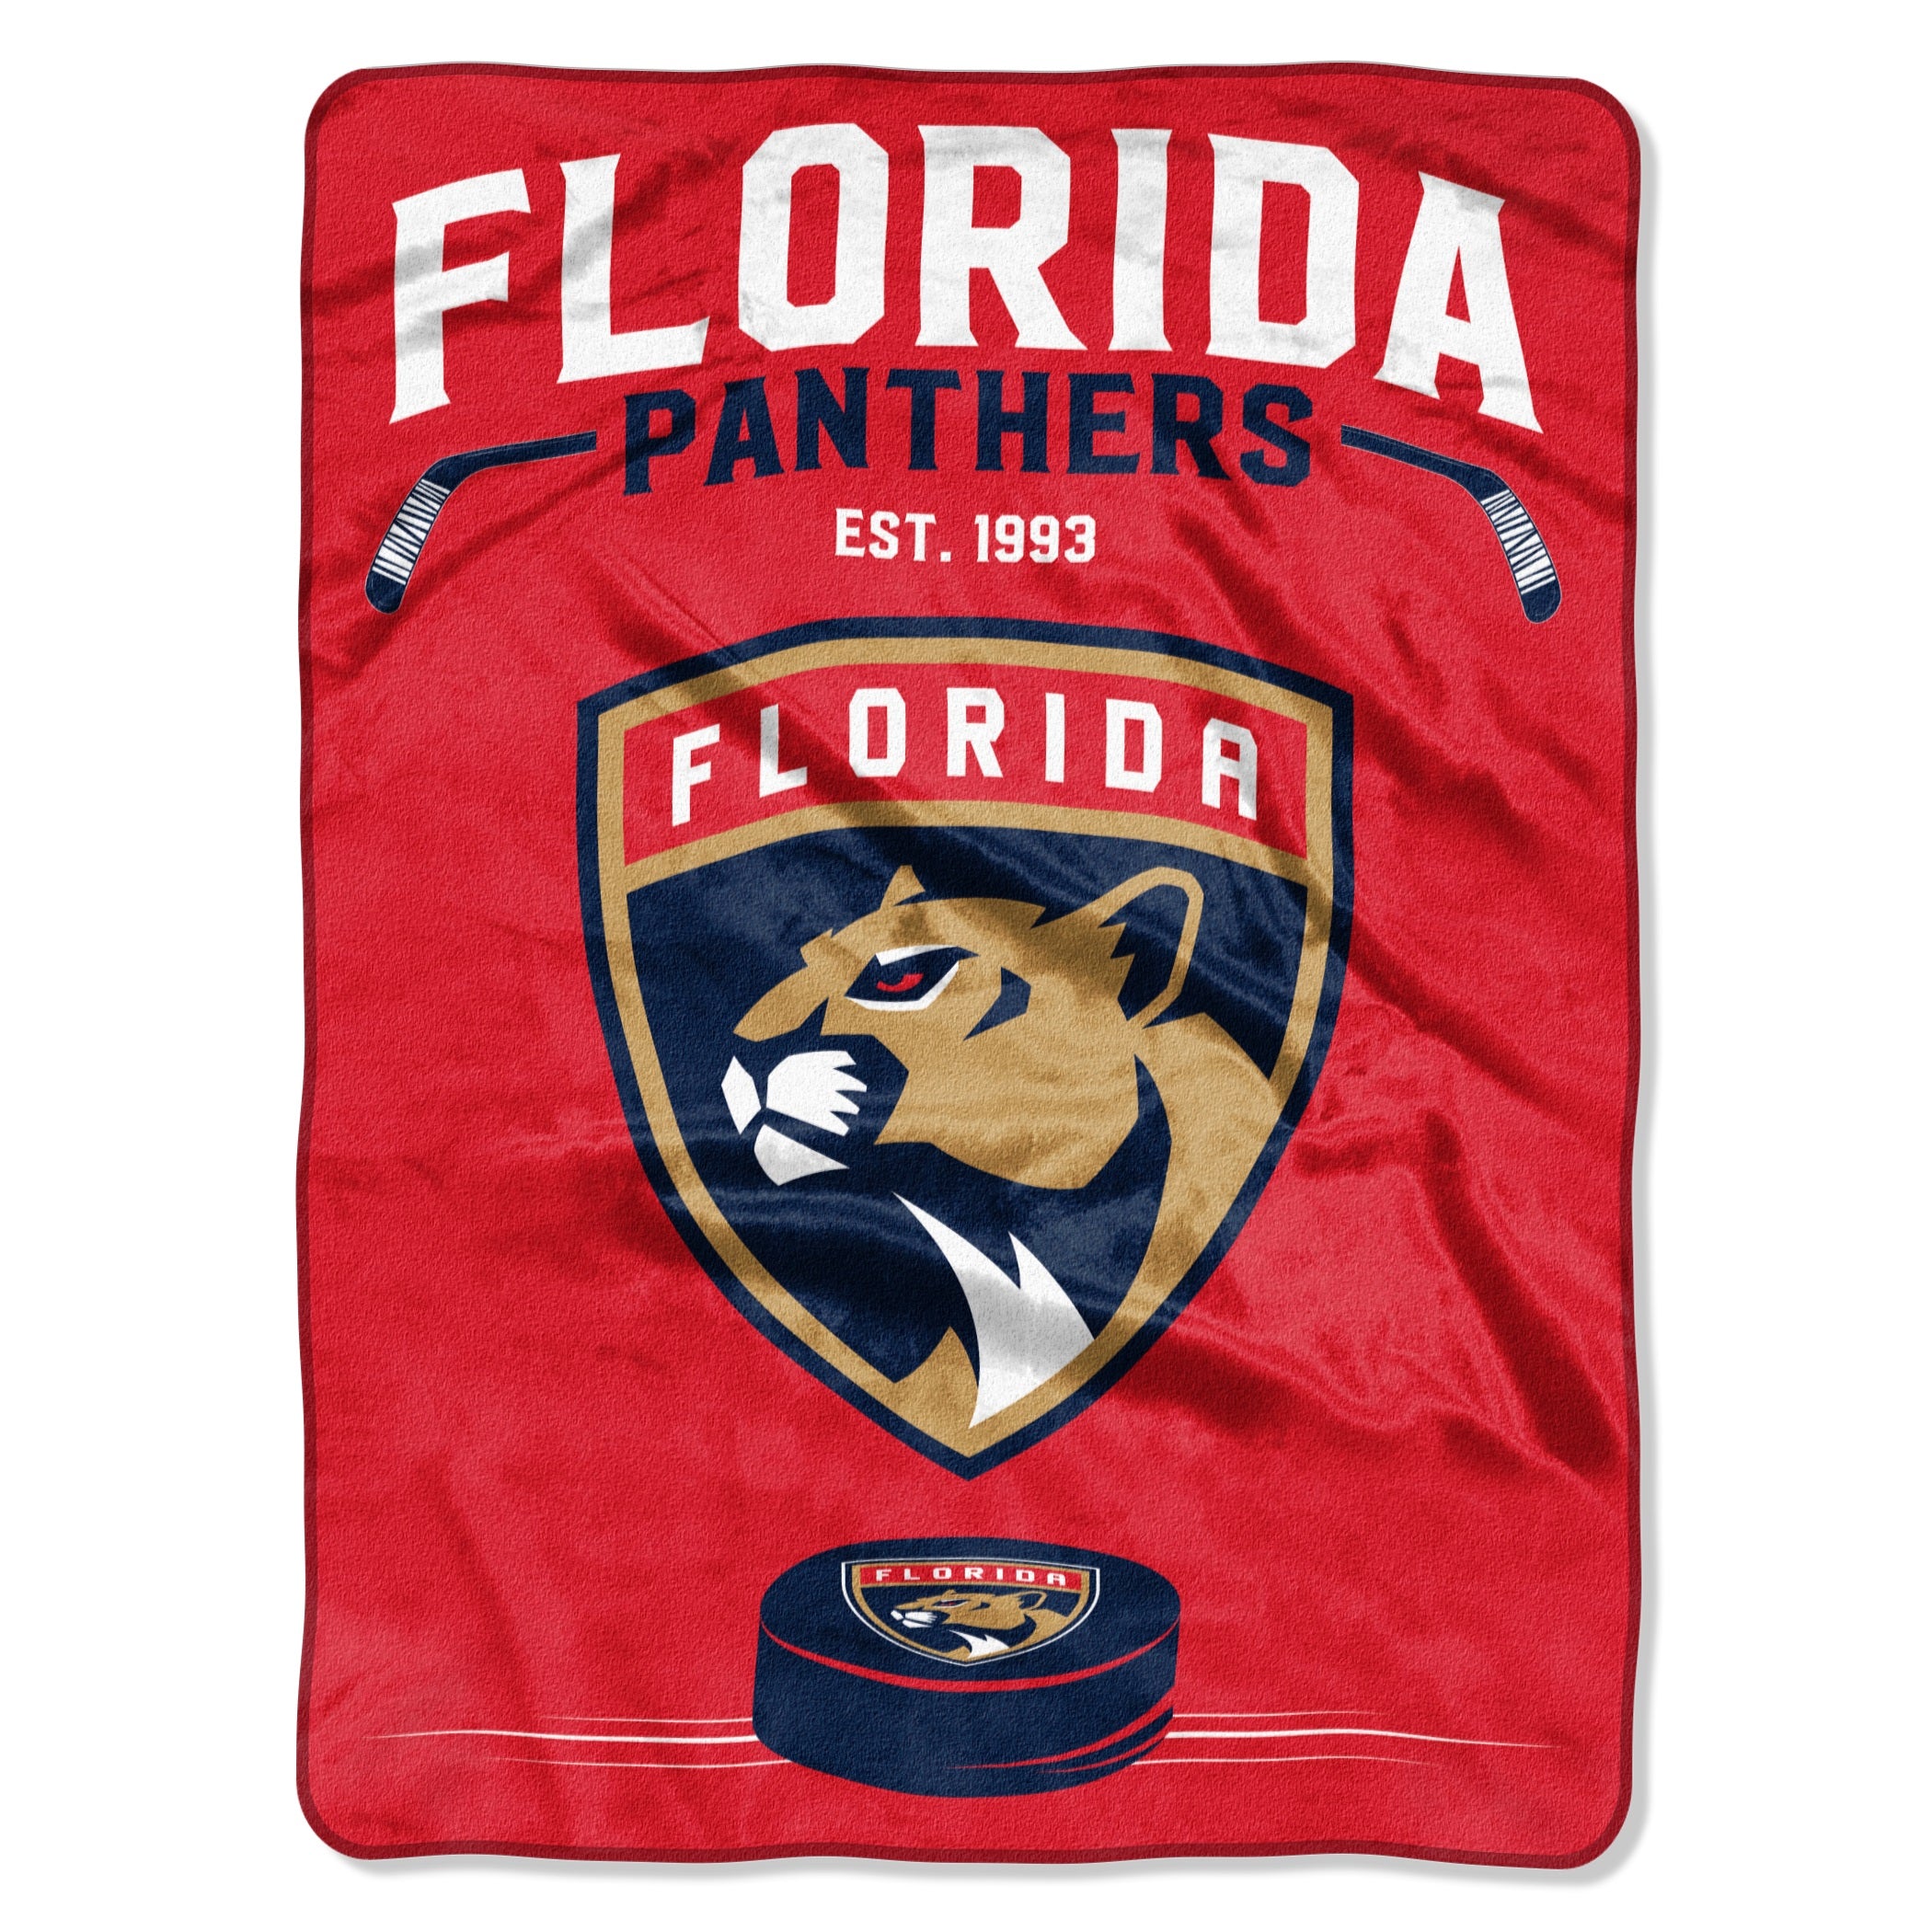 Florida Panthers Blanket 60x80 Raschel Inspired Design - Special Order